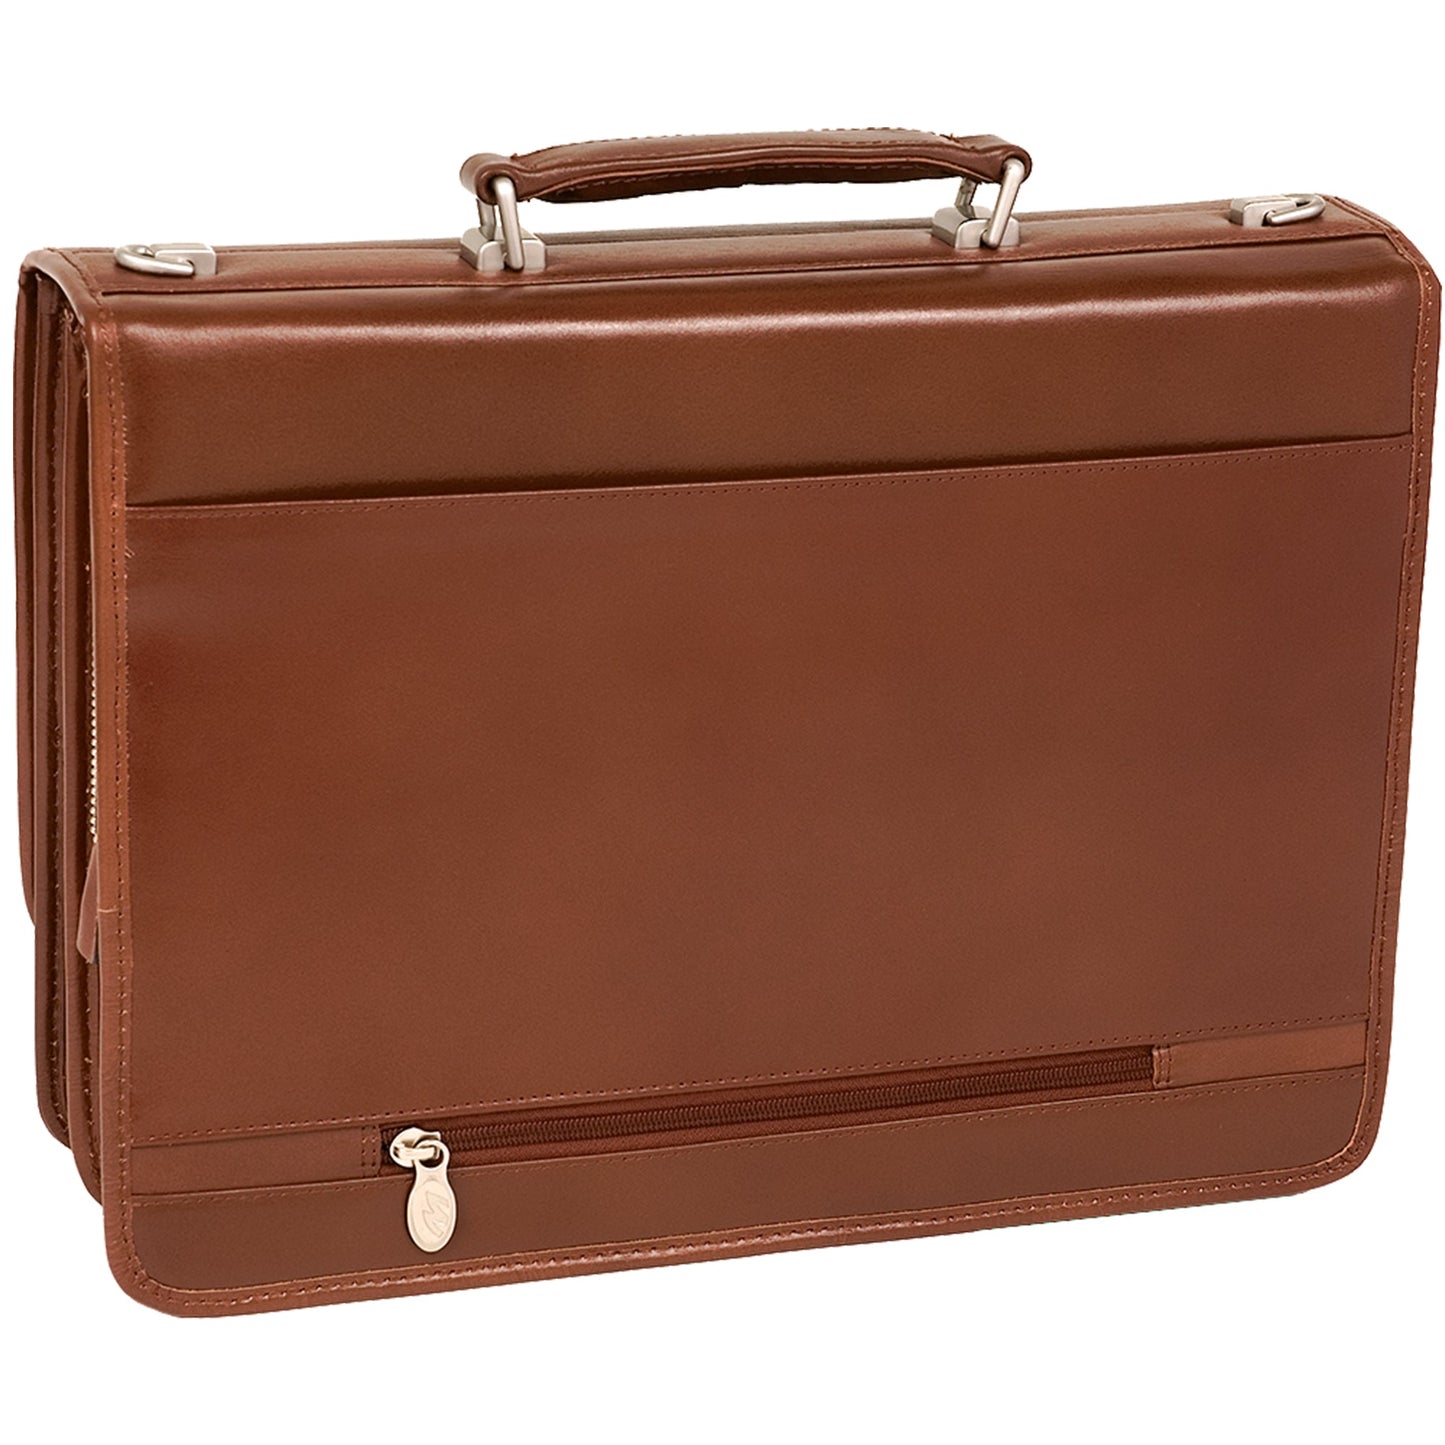 Soft Leather Handbag Briefcase - Smooth Nice Leather